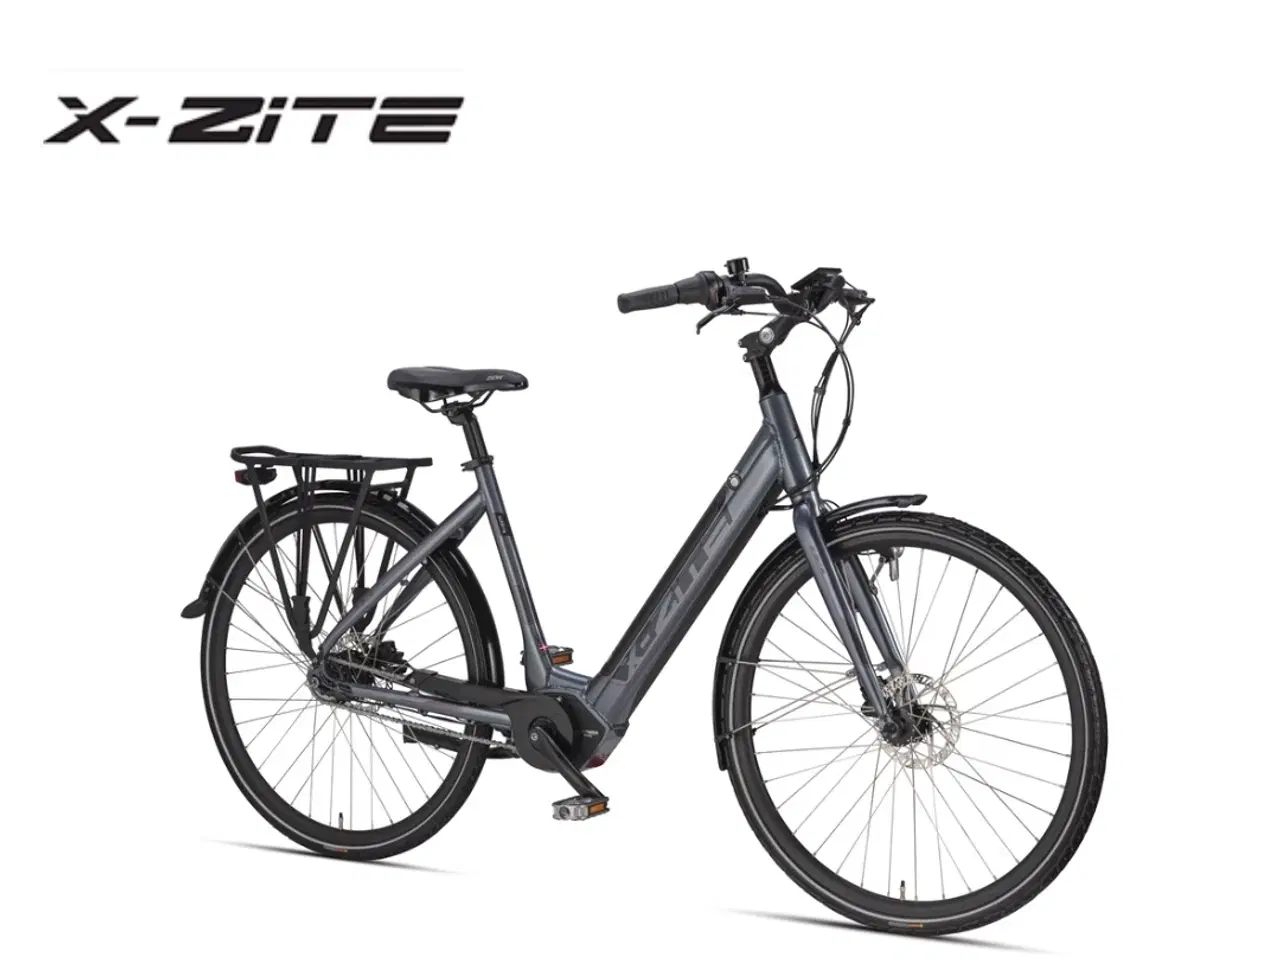 Billede 3 - Ny El cykel med massere tilbehør 